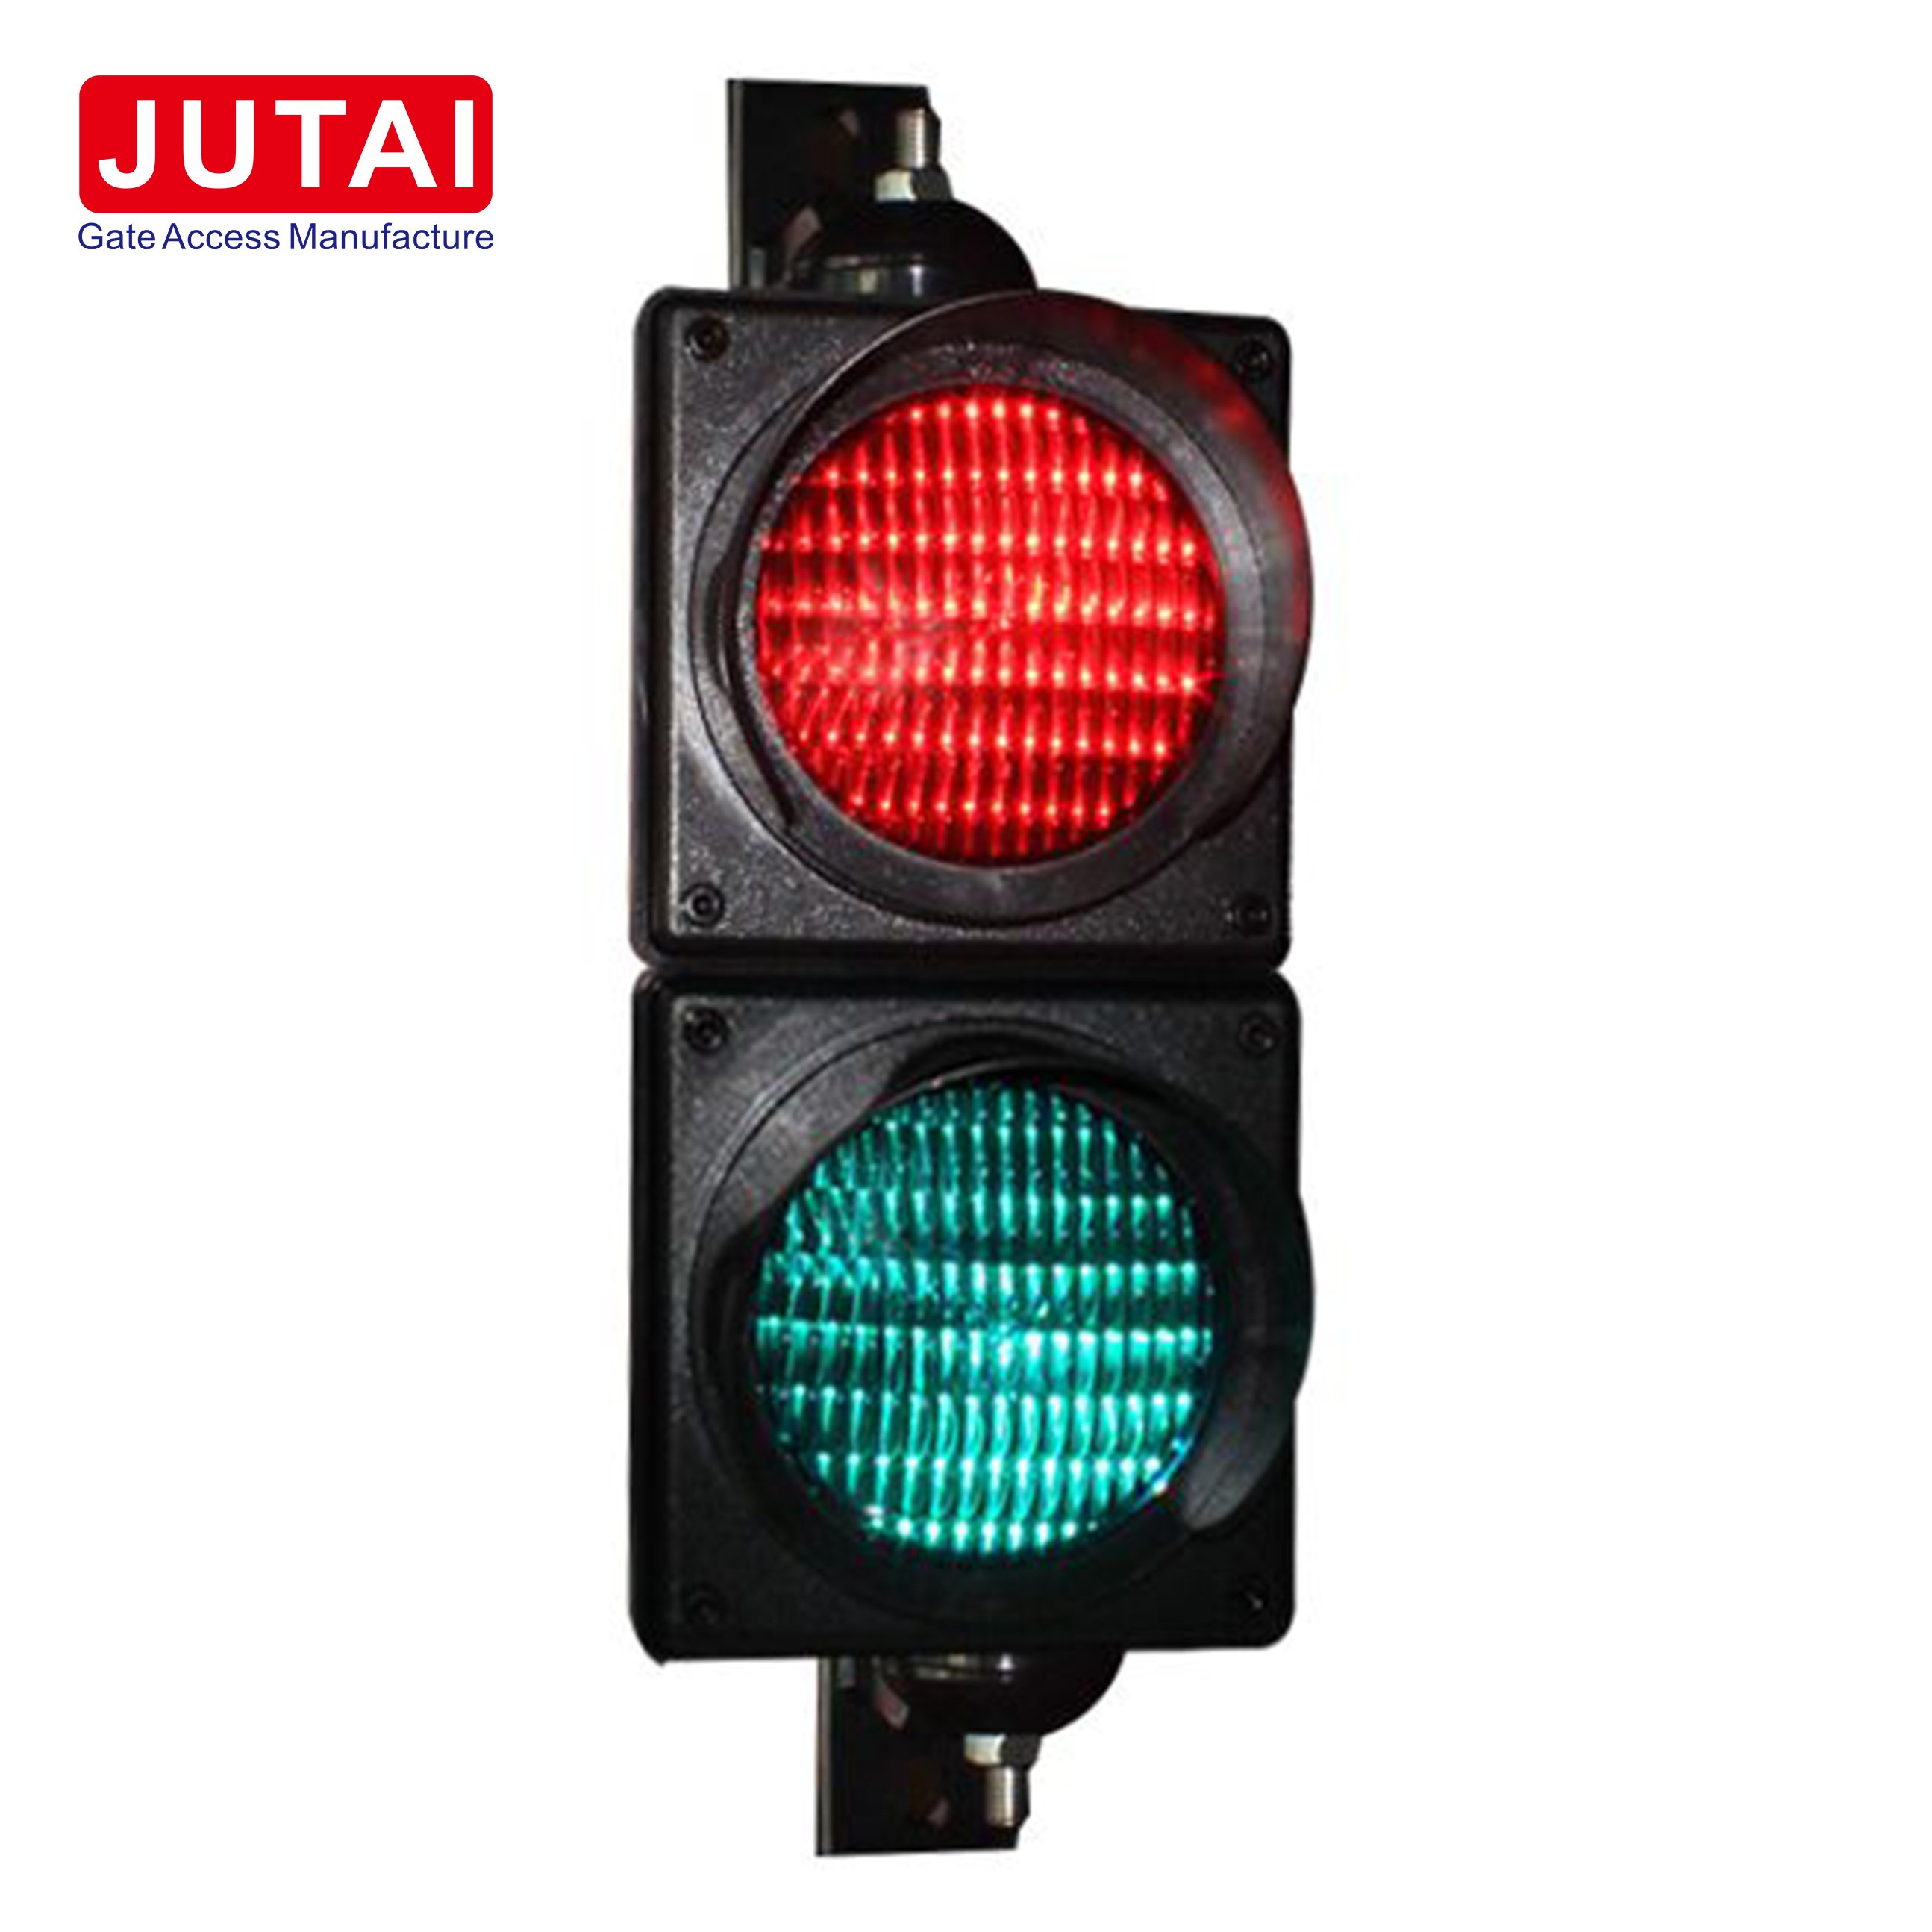 Cobweb Green and Red Traffic Light